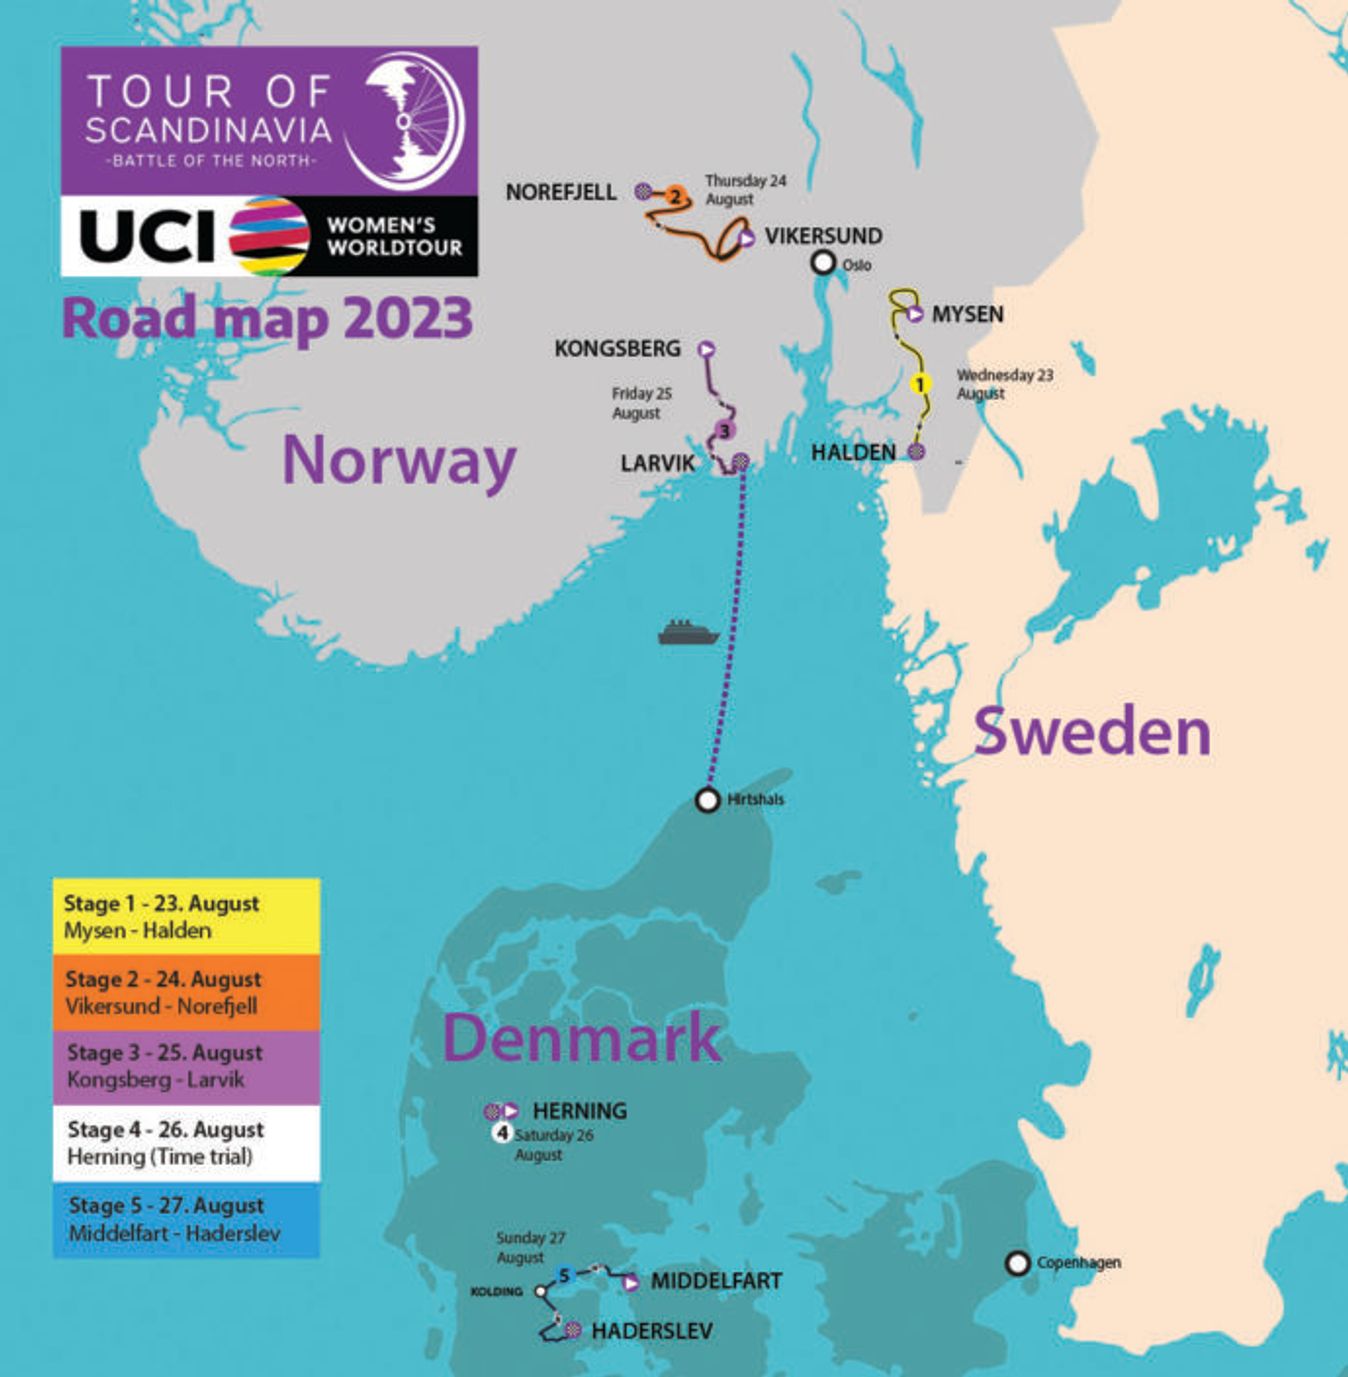 Tour of Scandinavia 2023 route map